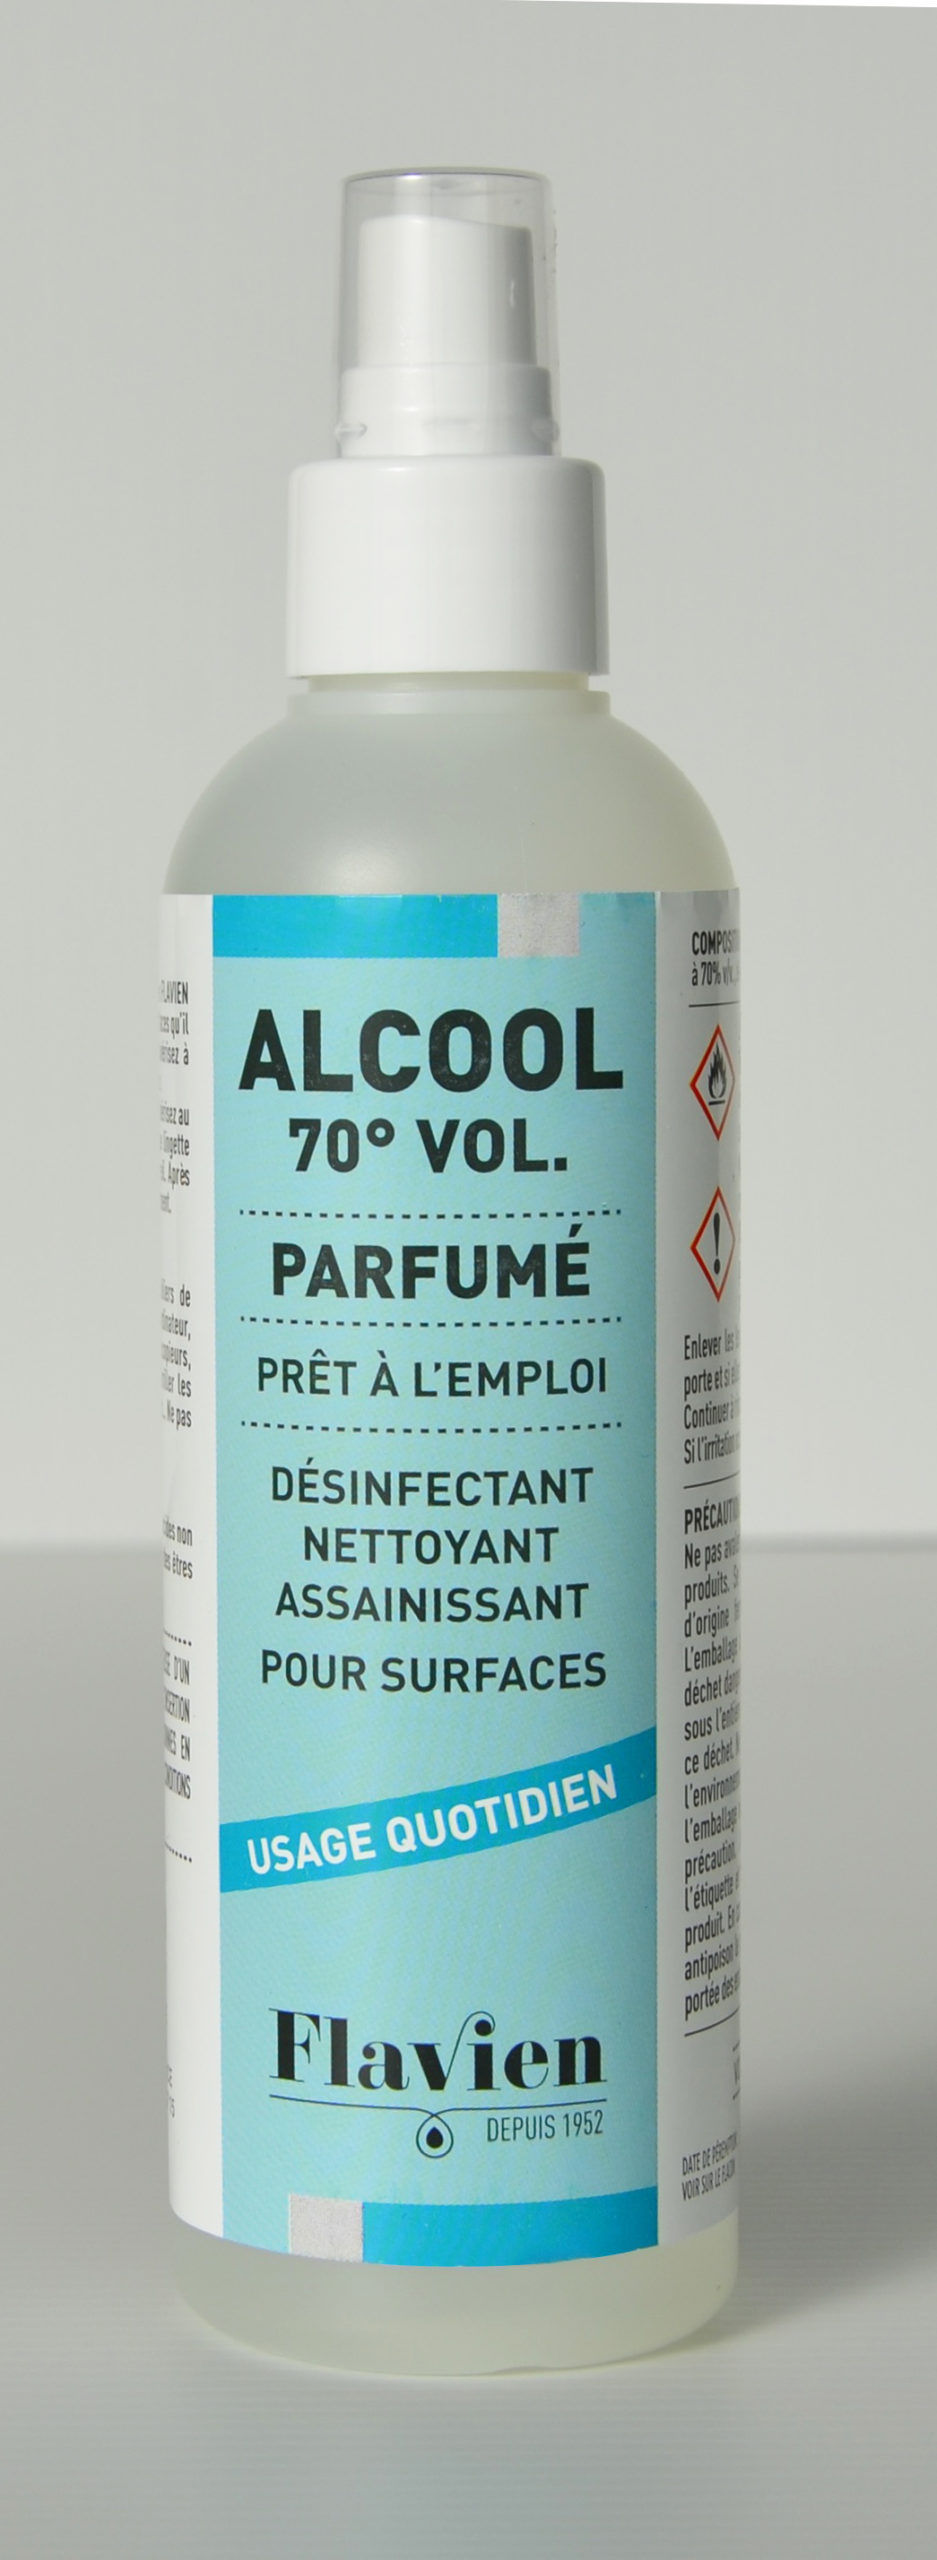 alcool Isopropylique, solution nettoyante désinfectante, solution  desinfectante pour fournitures